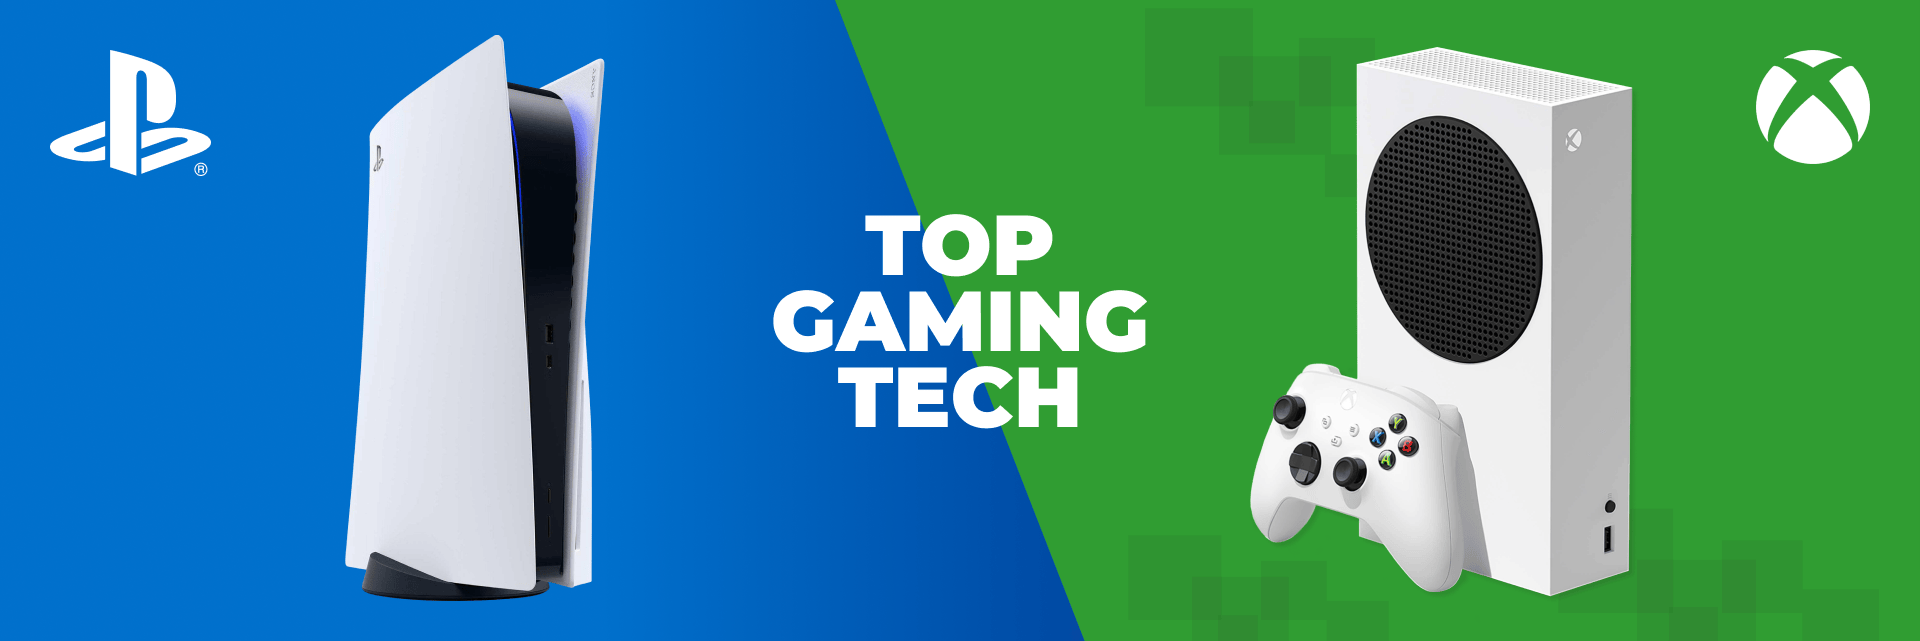 Top Gaming Tech